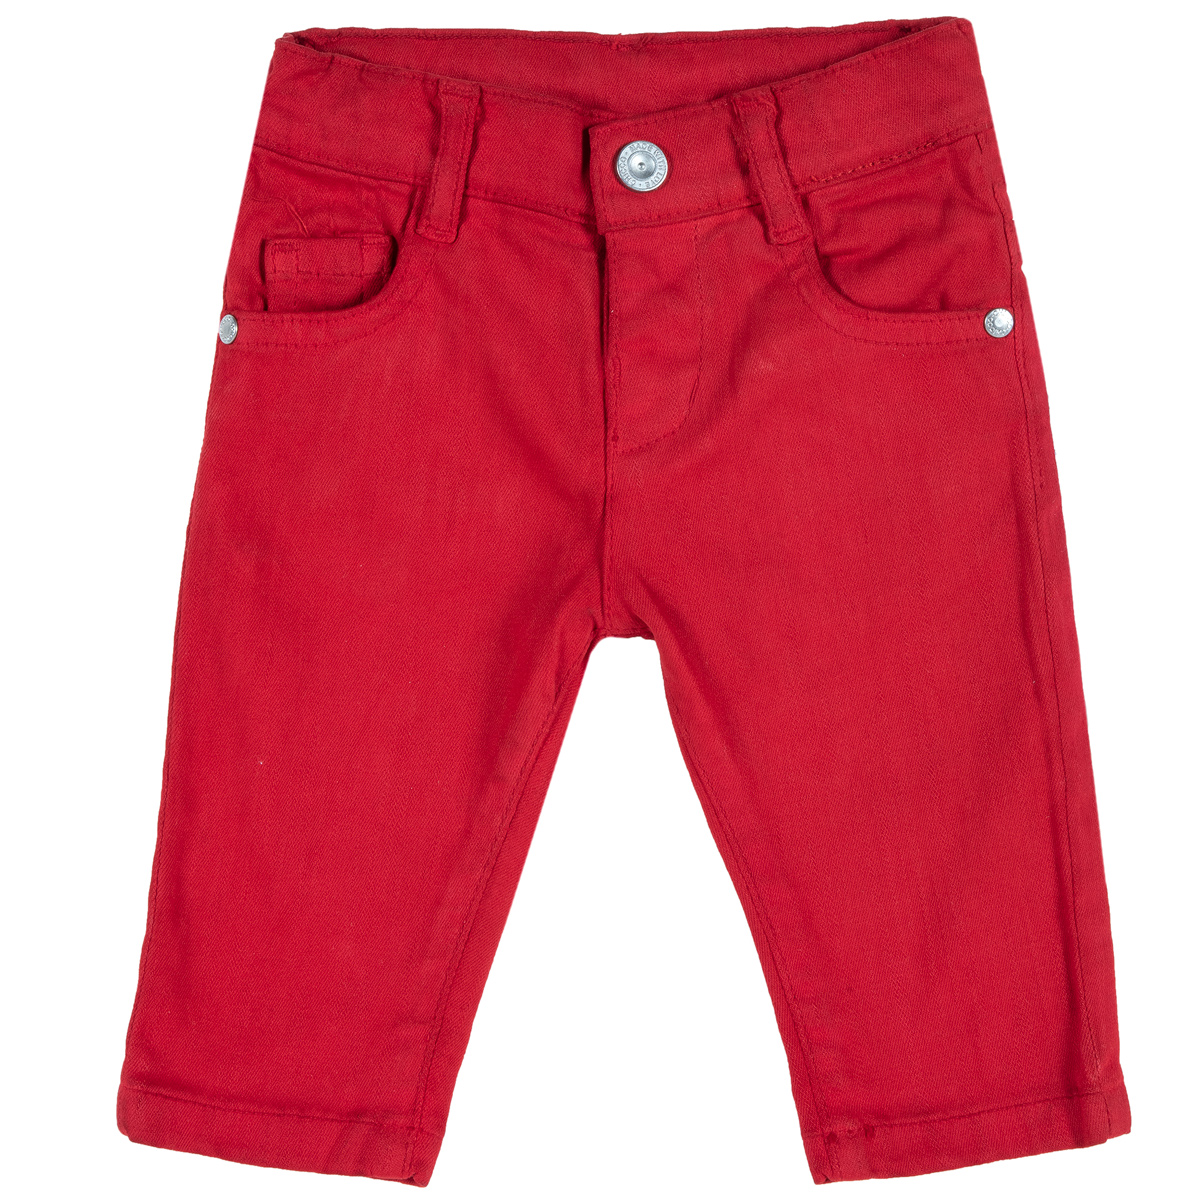 Pantalon lung copii Chicco, regular fit, rosu, 08227